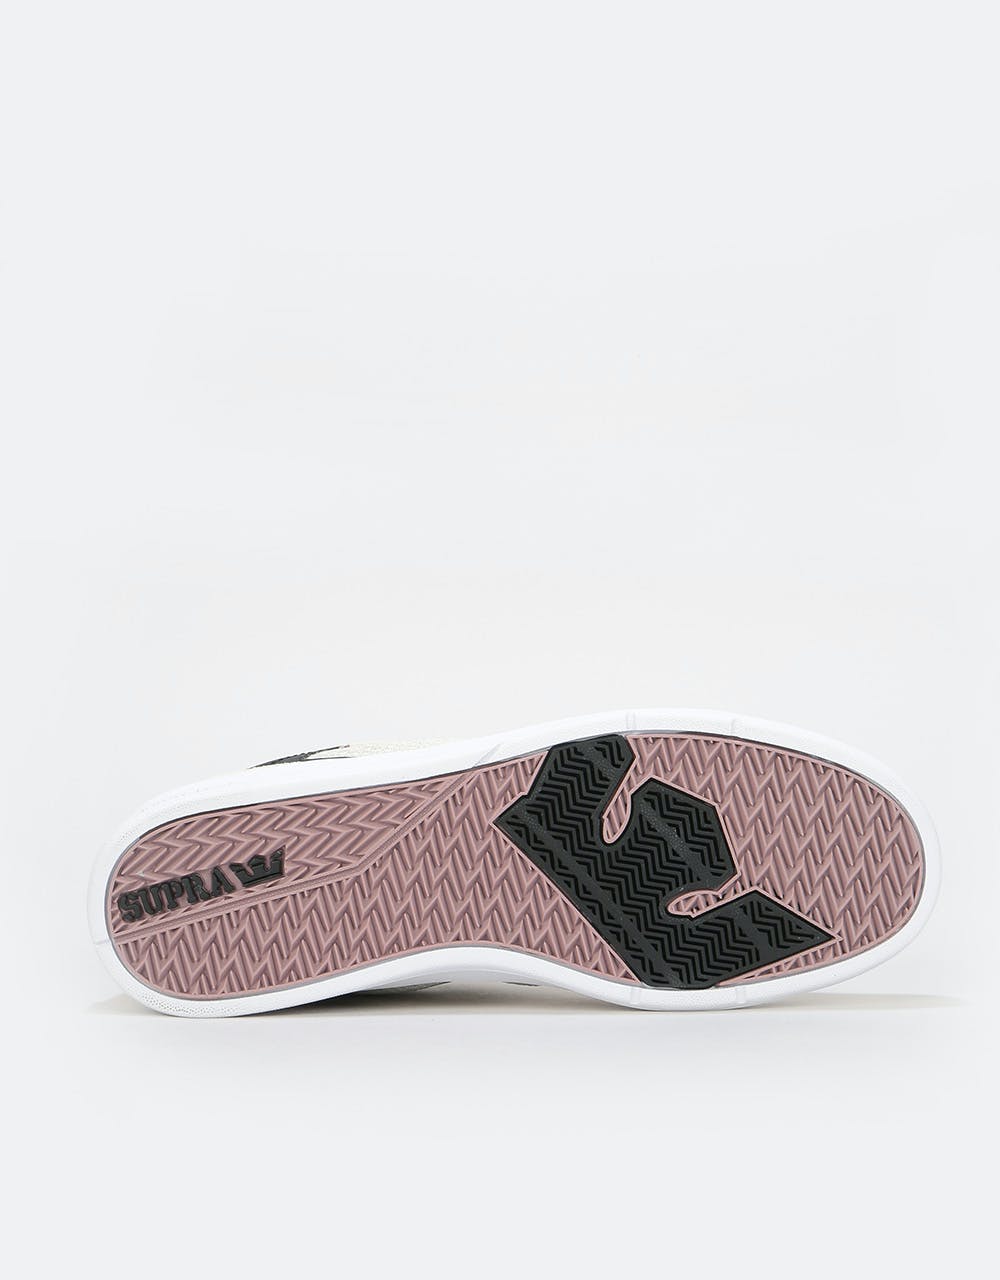 Supra Saint Skate Shoes - Bone/Black-White